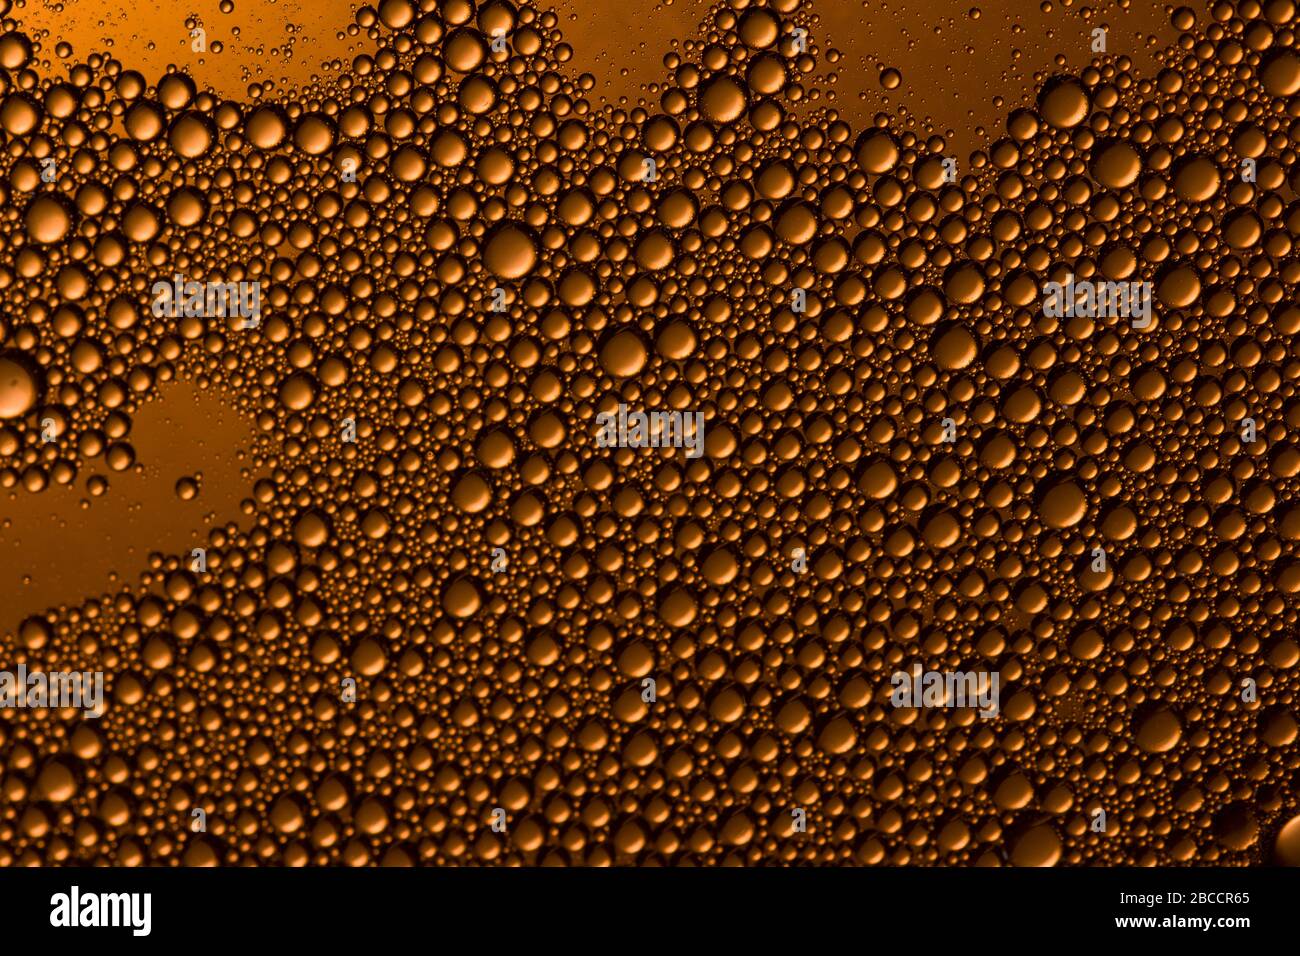 Yellow orange water drops background. Soft focus Stock Photo